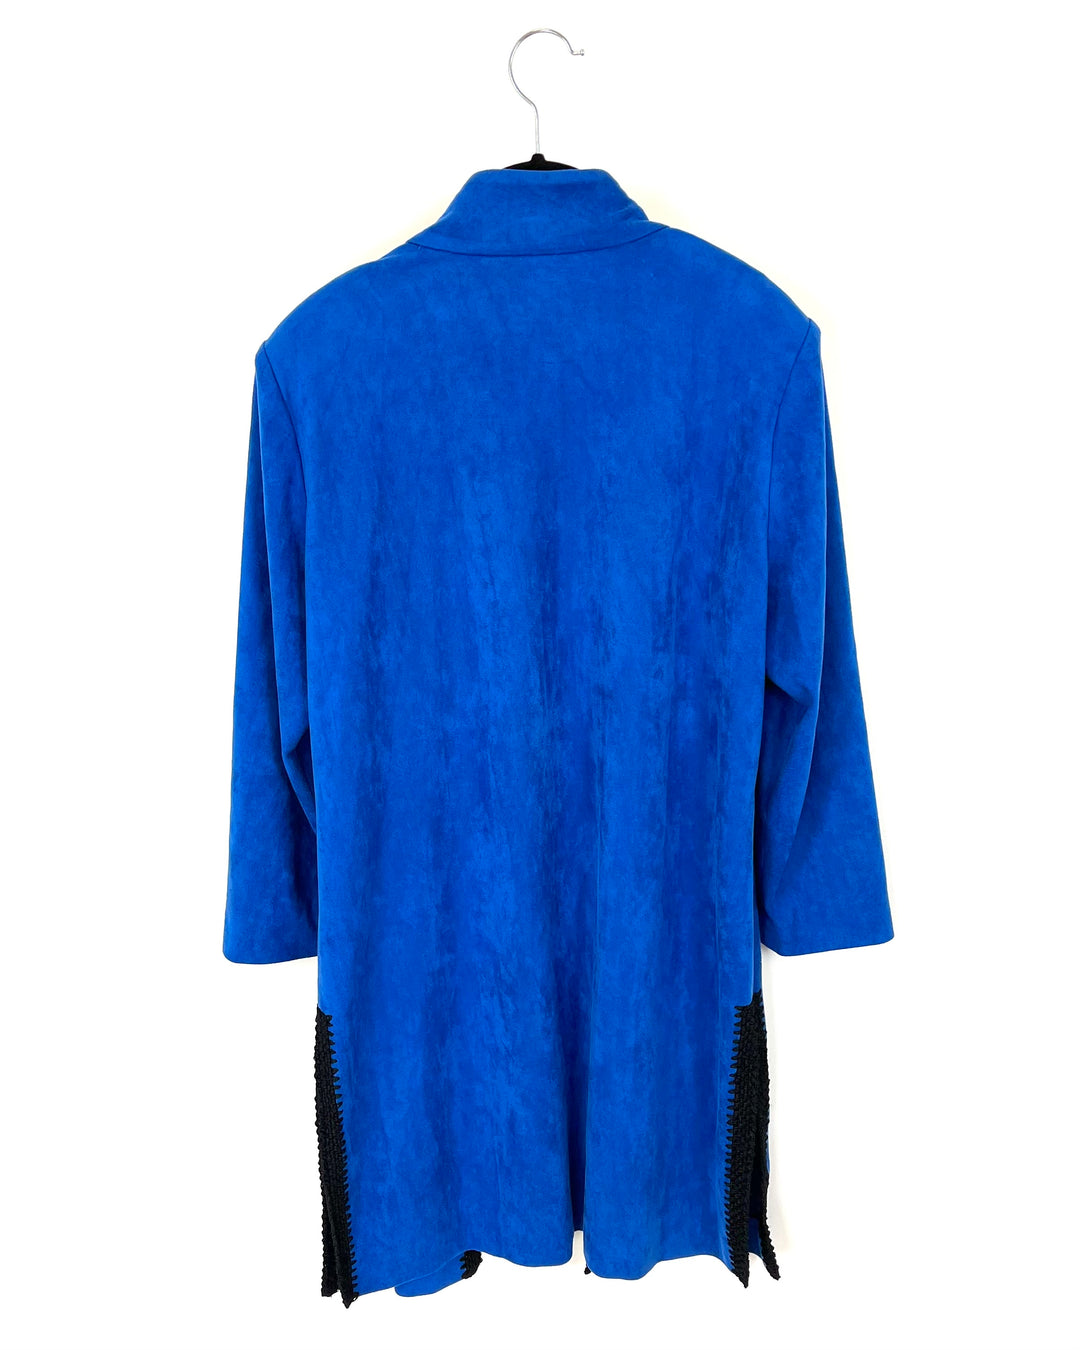 Blue Black Trim Cropped Sleeve Cardigan - Size 2-4